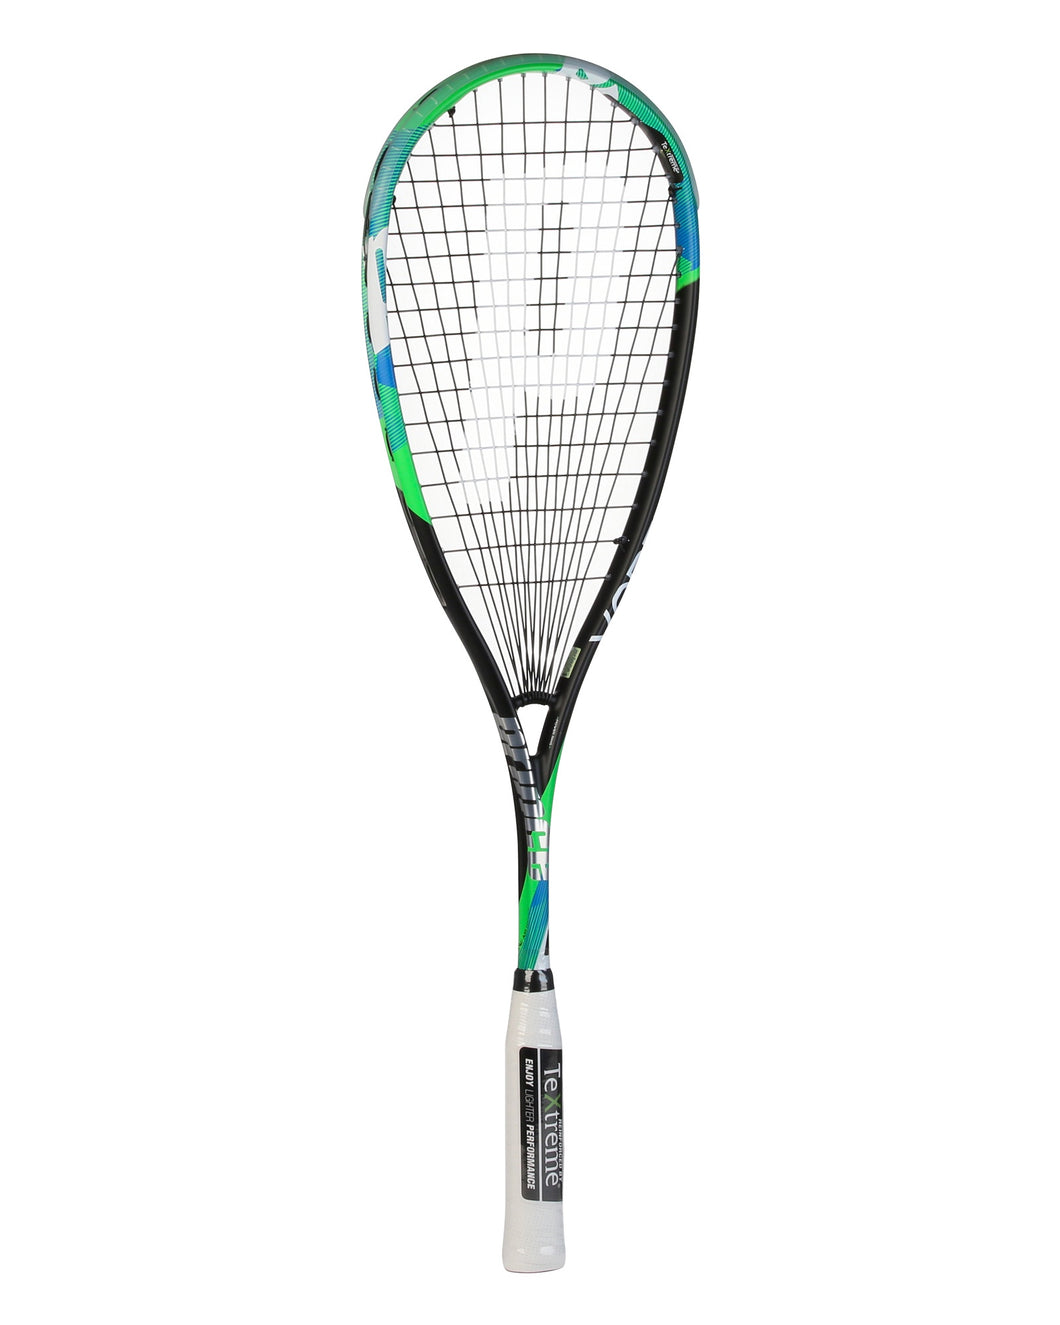 Vortex Pro 650 Squash Racket